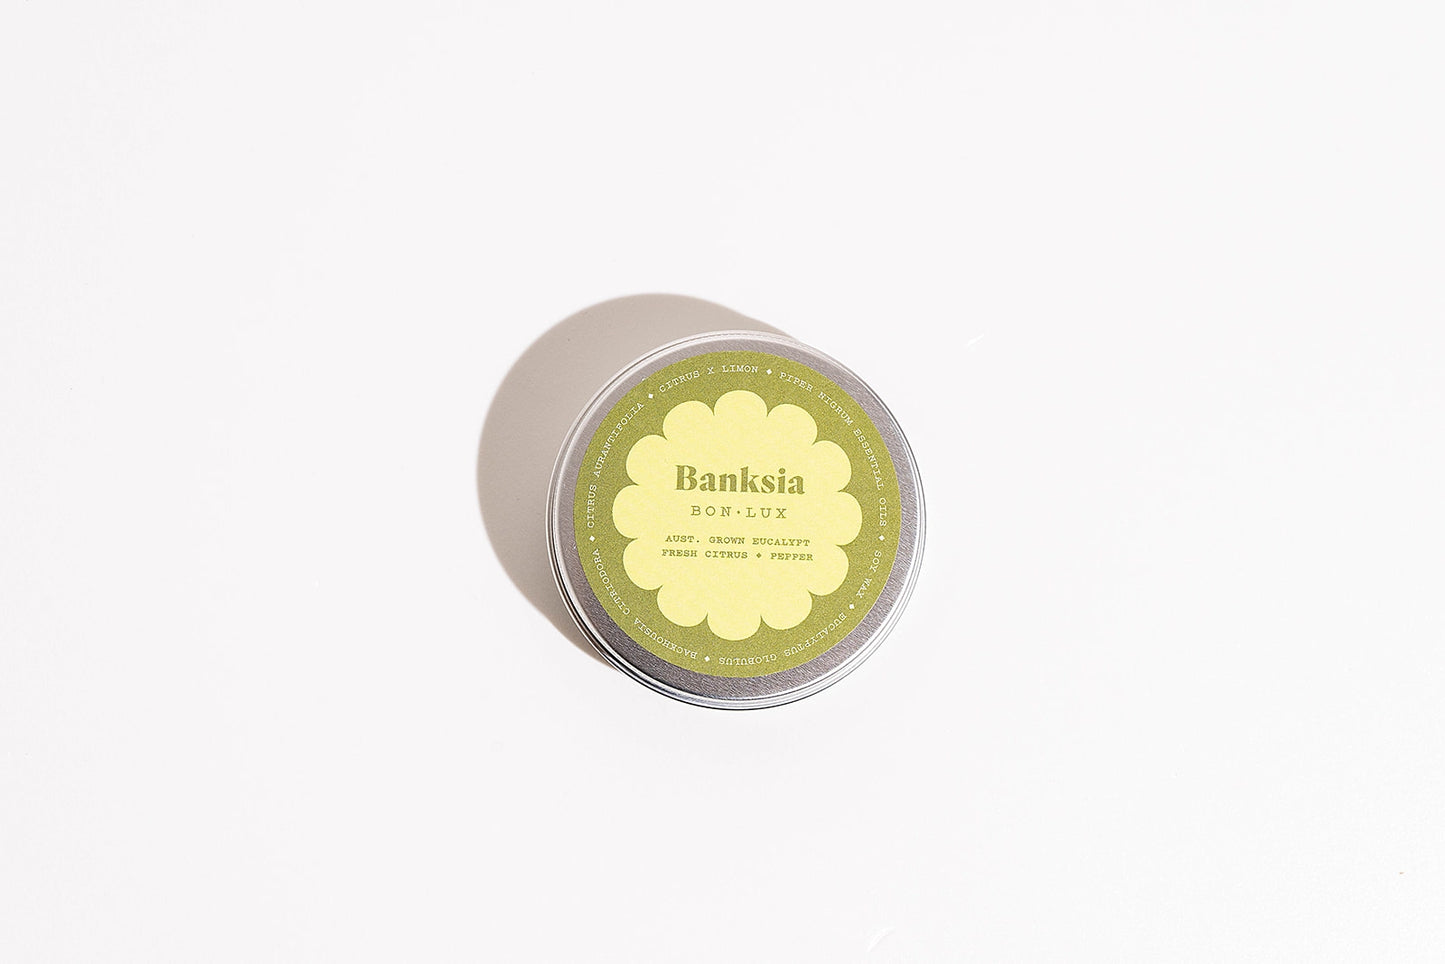 Bon Lux - Travel Tin Candle (Banksia)